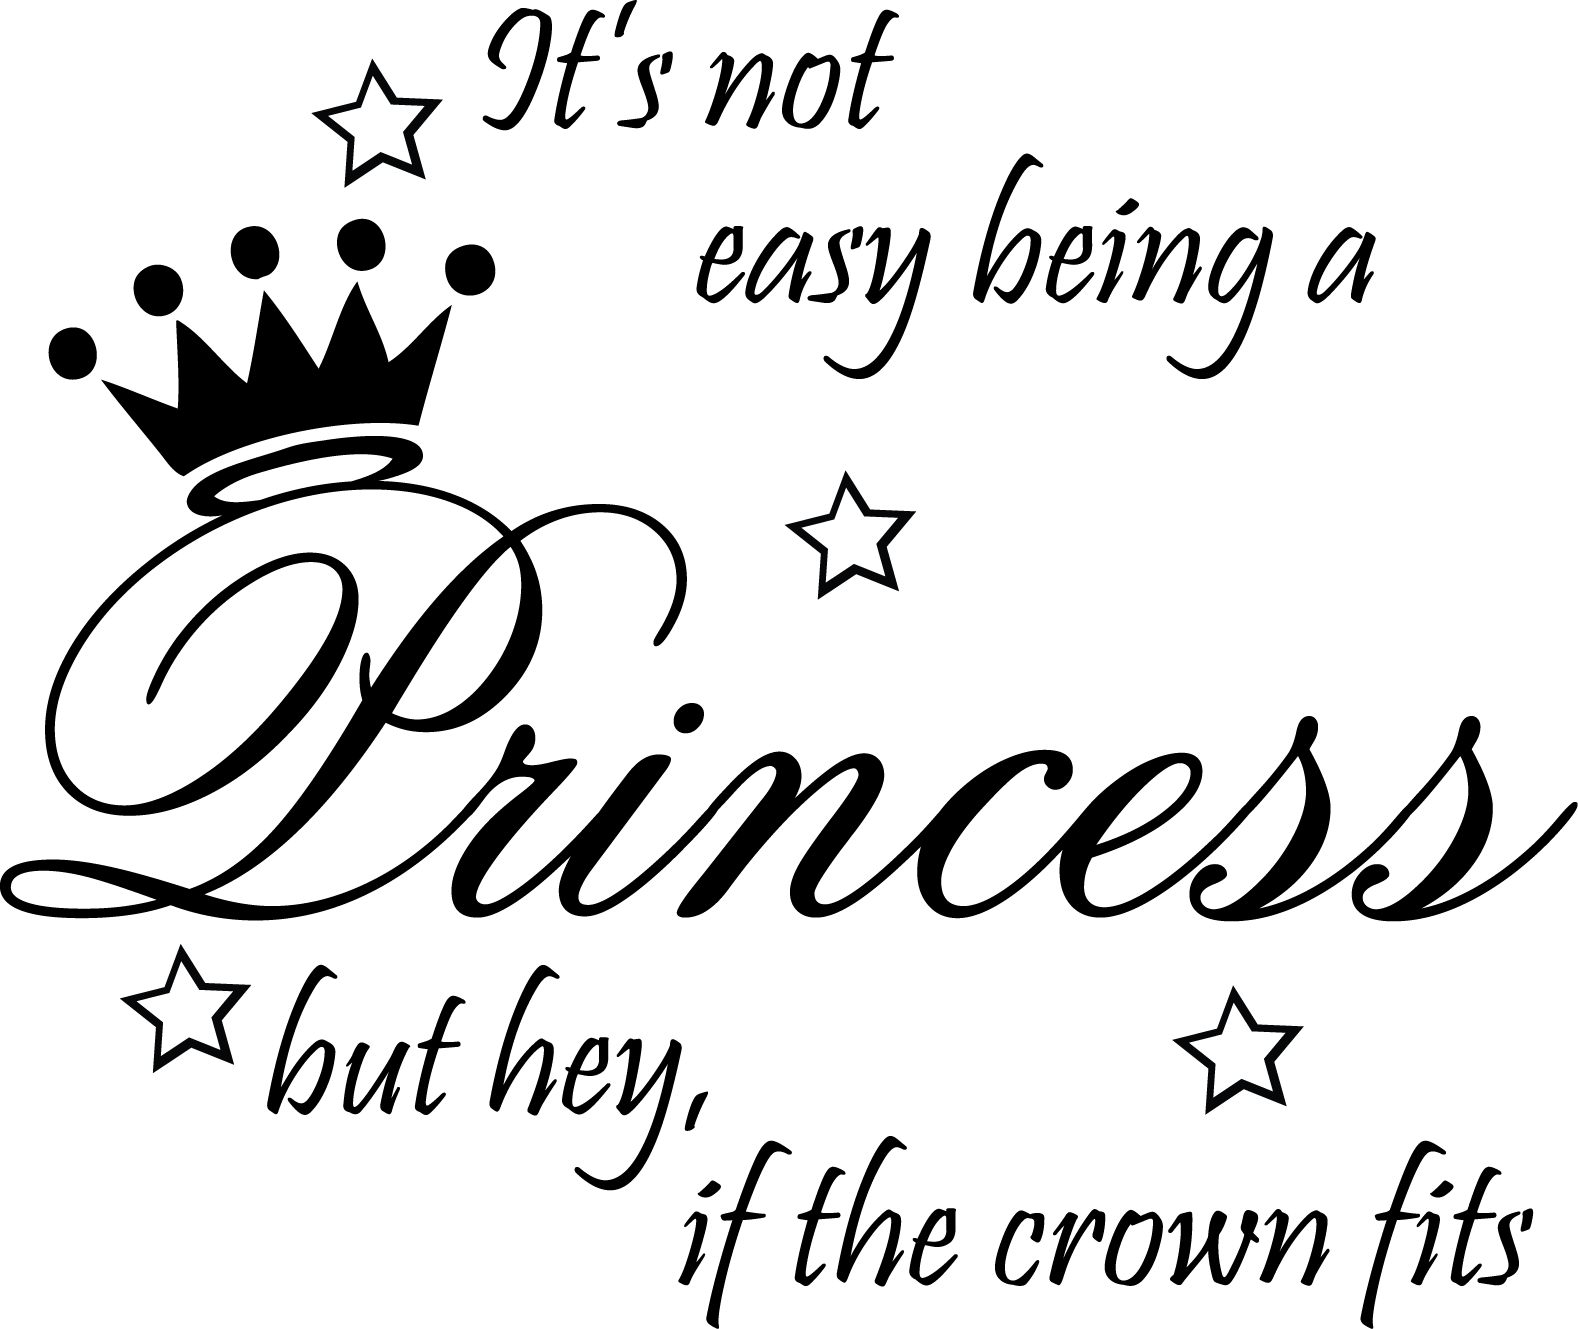 Princess Crown Drawing